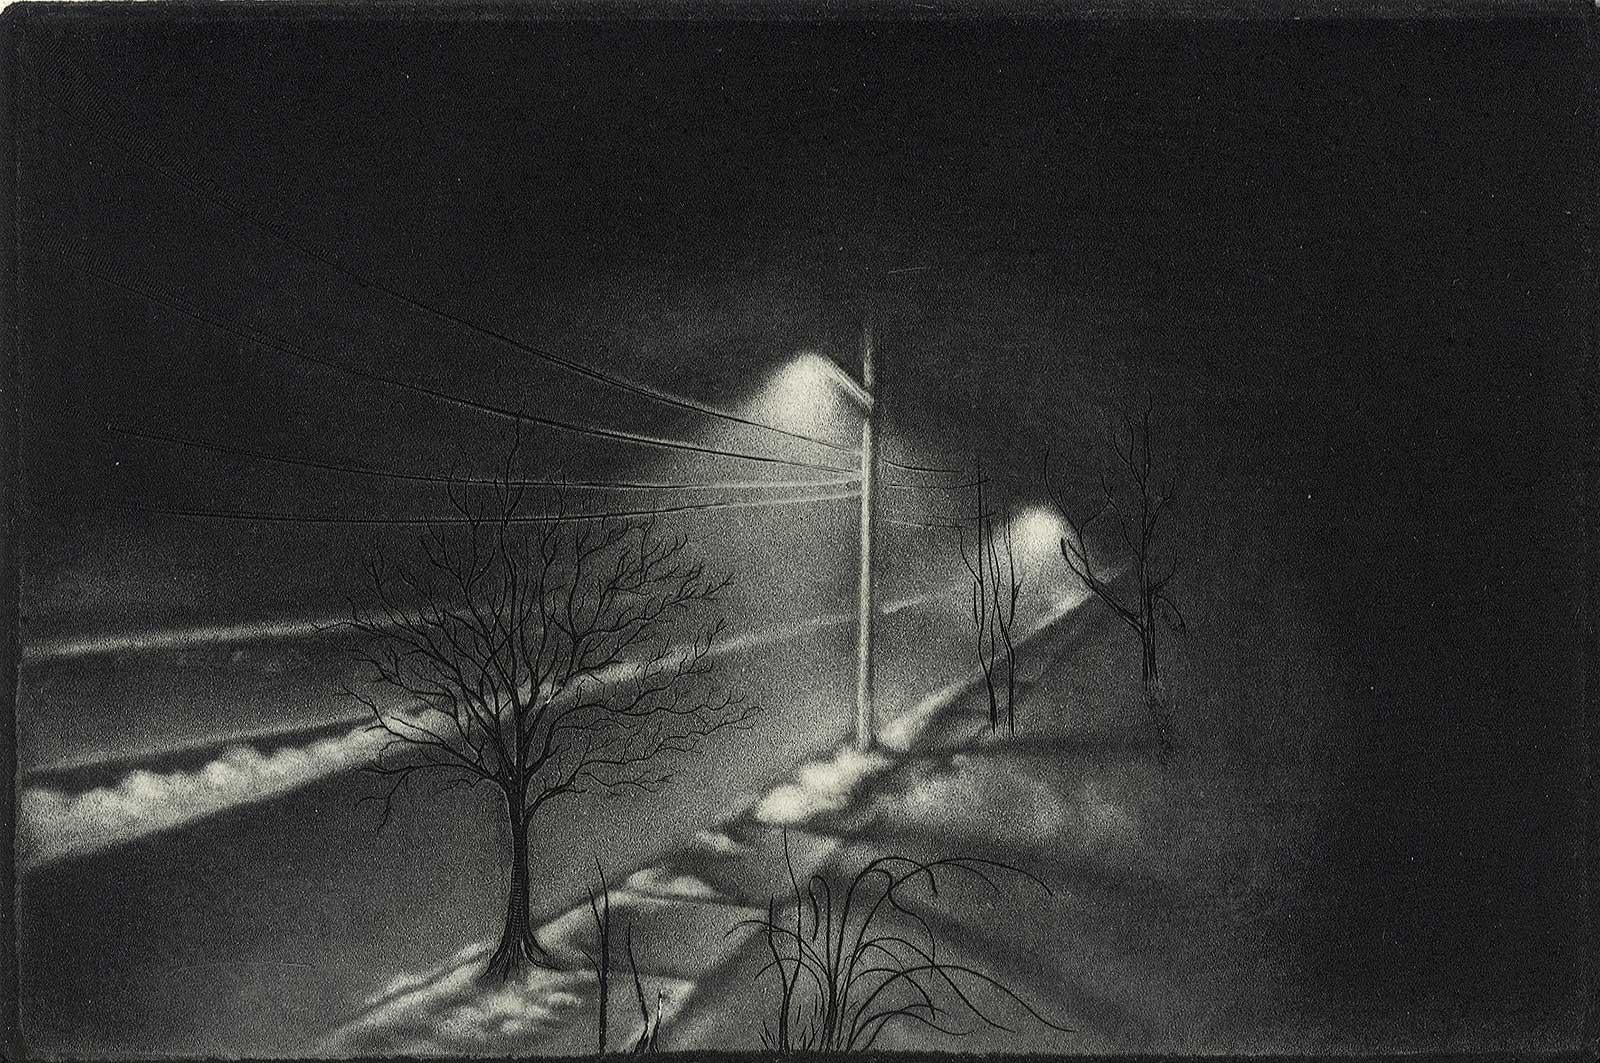 Carol Wax Print - Foggy Night (the way home or a Stephen King setting)